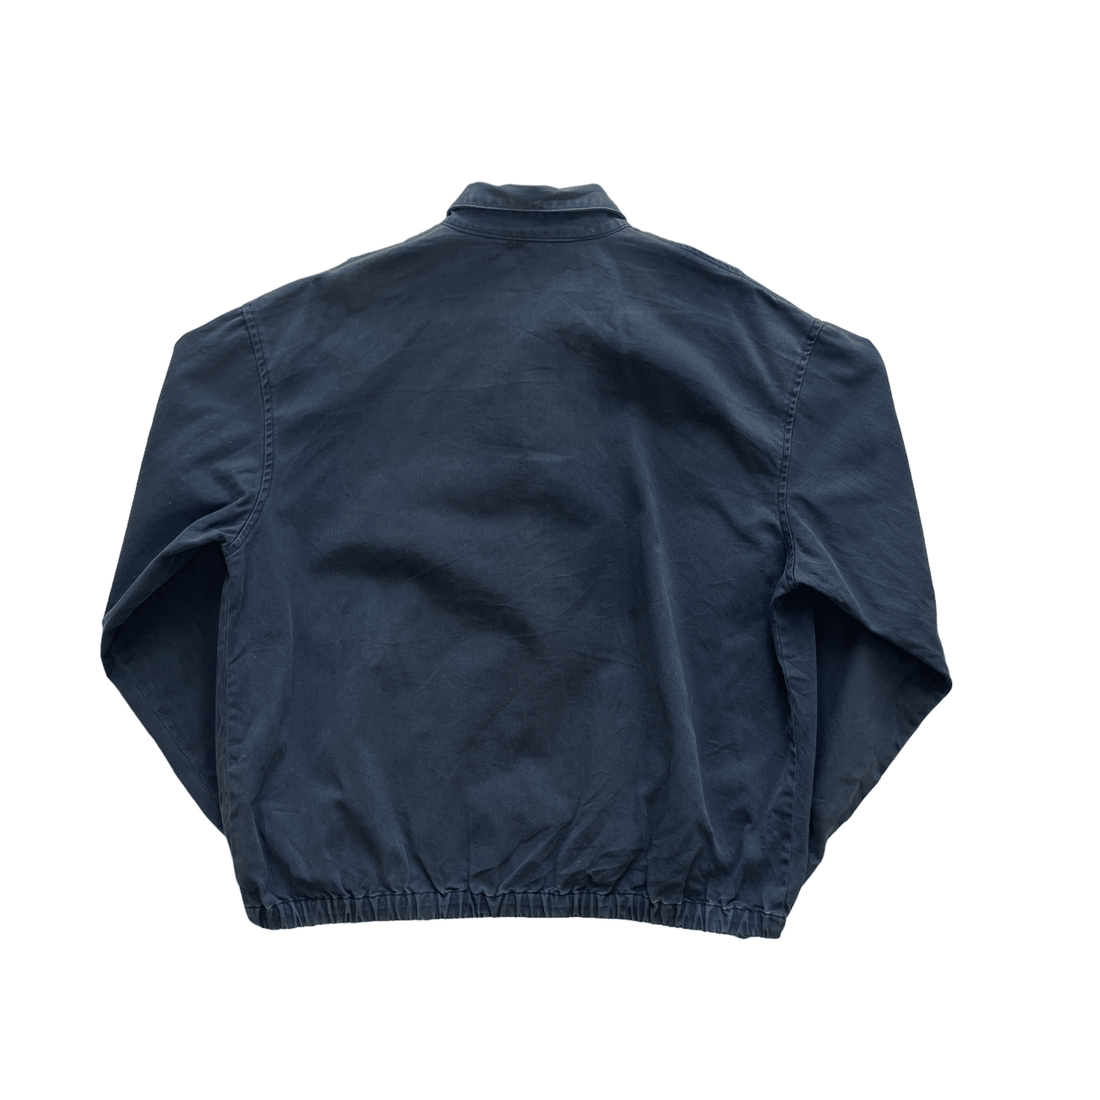 Vintage Blue Polo Ralph Lauren Harrington Jacket - Medium - The Streetwear Studio